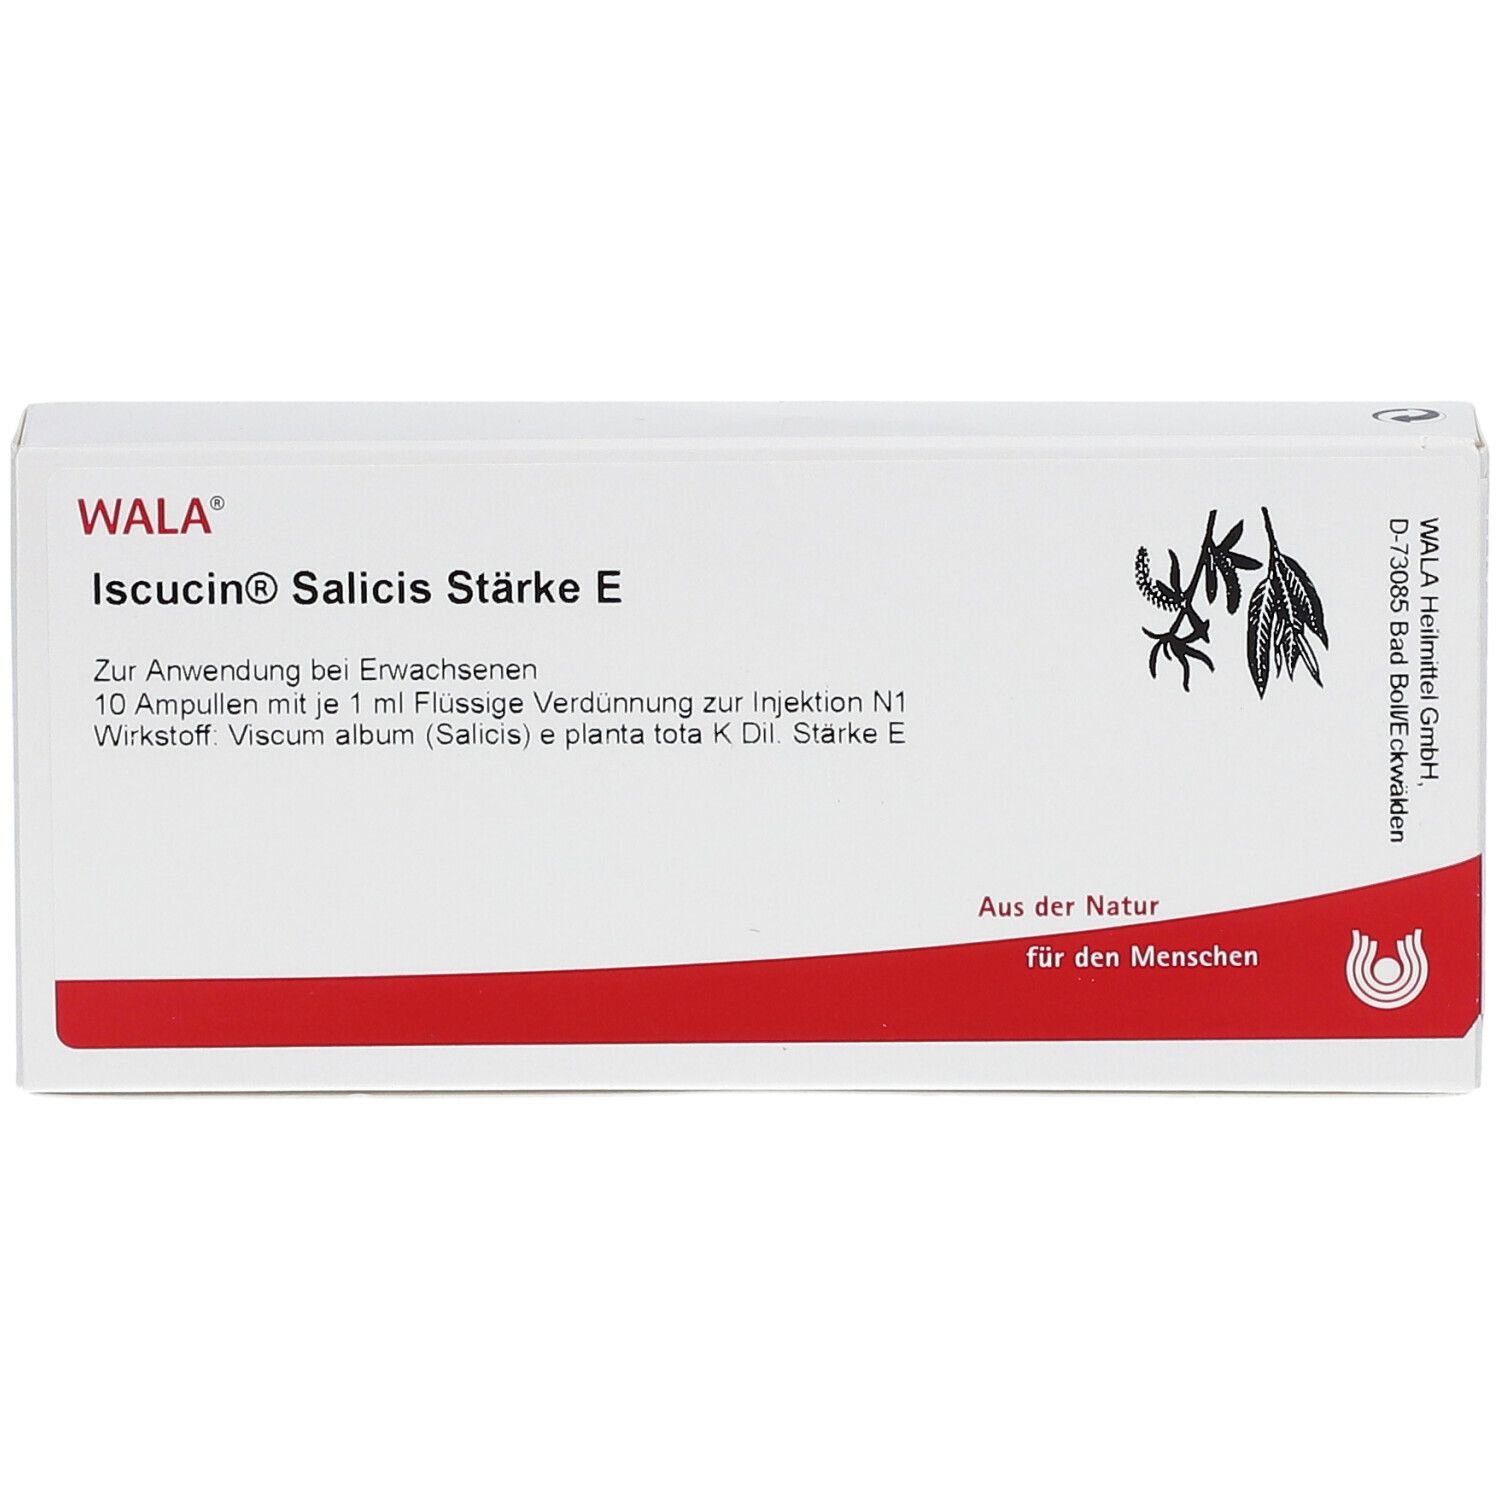 WALA® Iscucin Salicis Staerke E Amp.